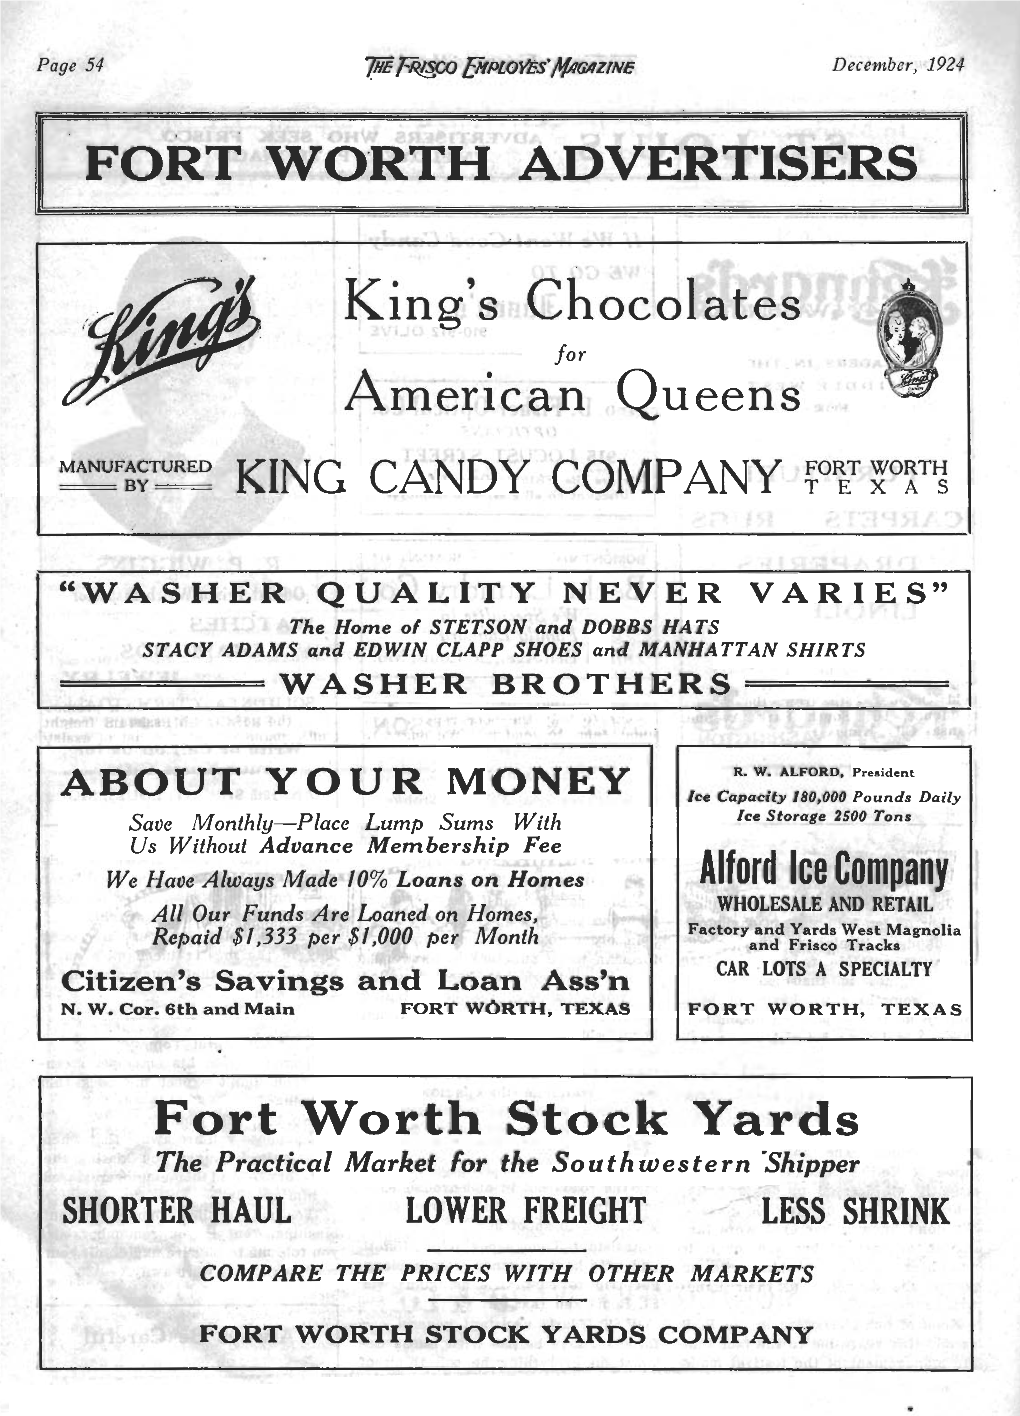 The Frisco Employes' Magazine, December 1924